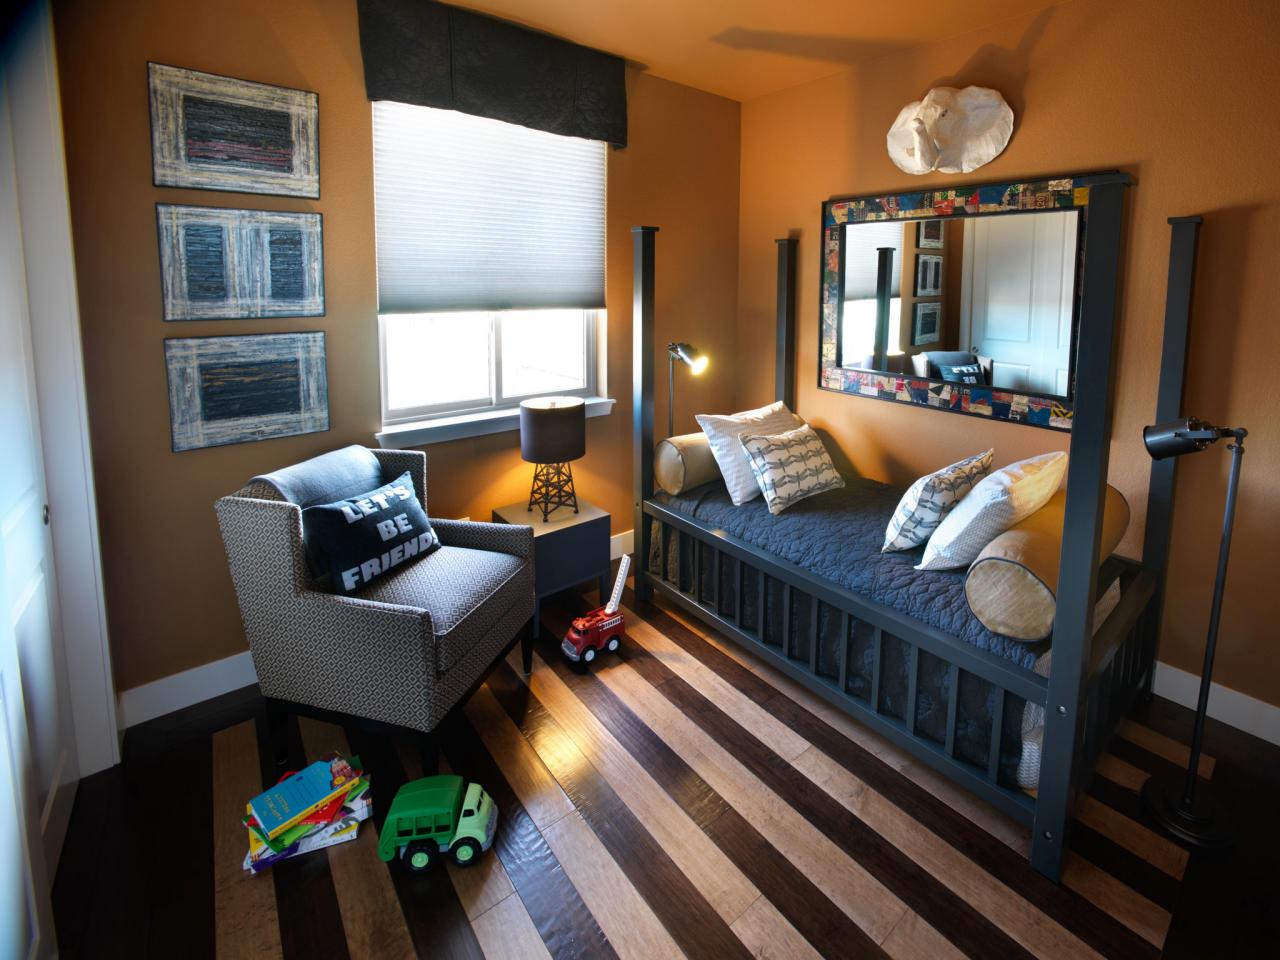 Kids Bedroom Flooring Pictures Options Ideas Hgtv